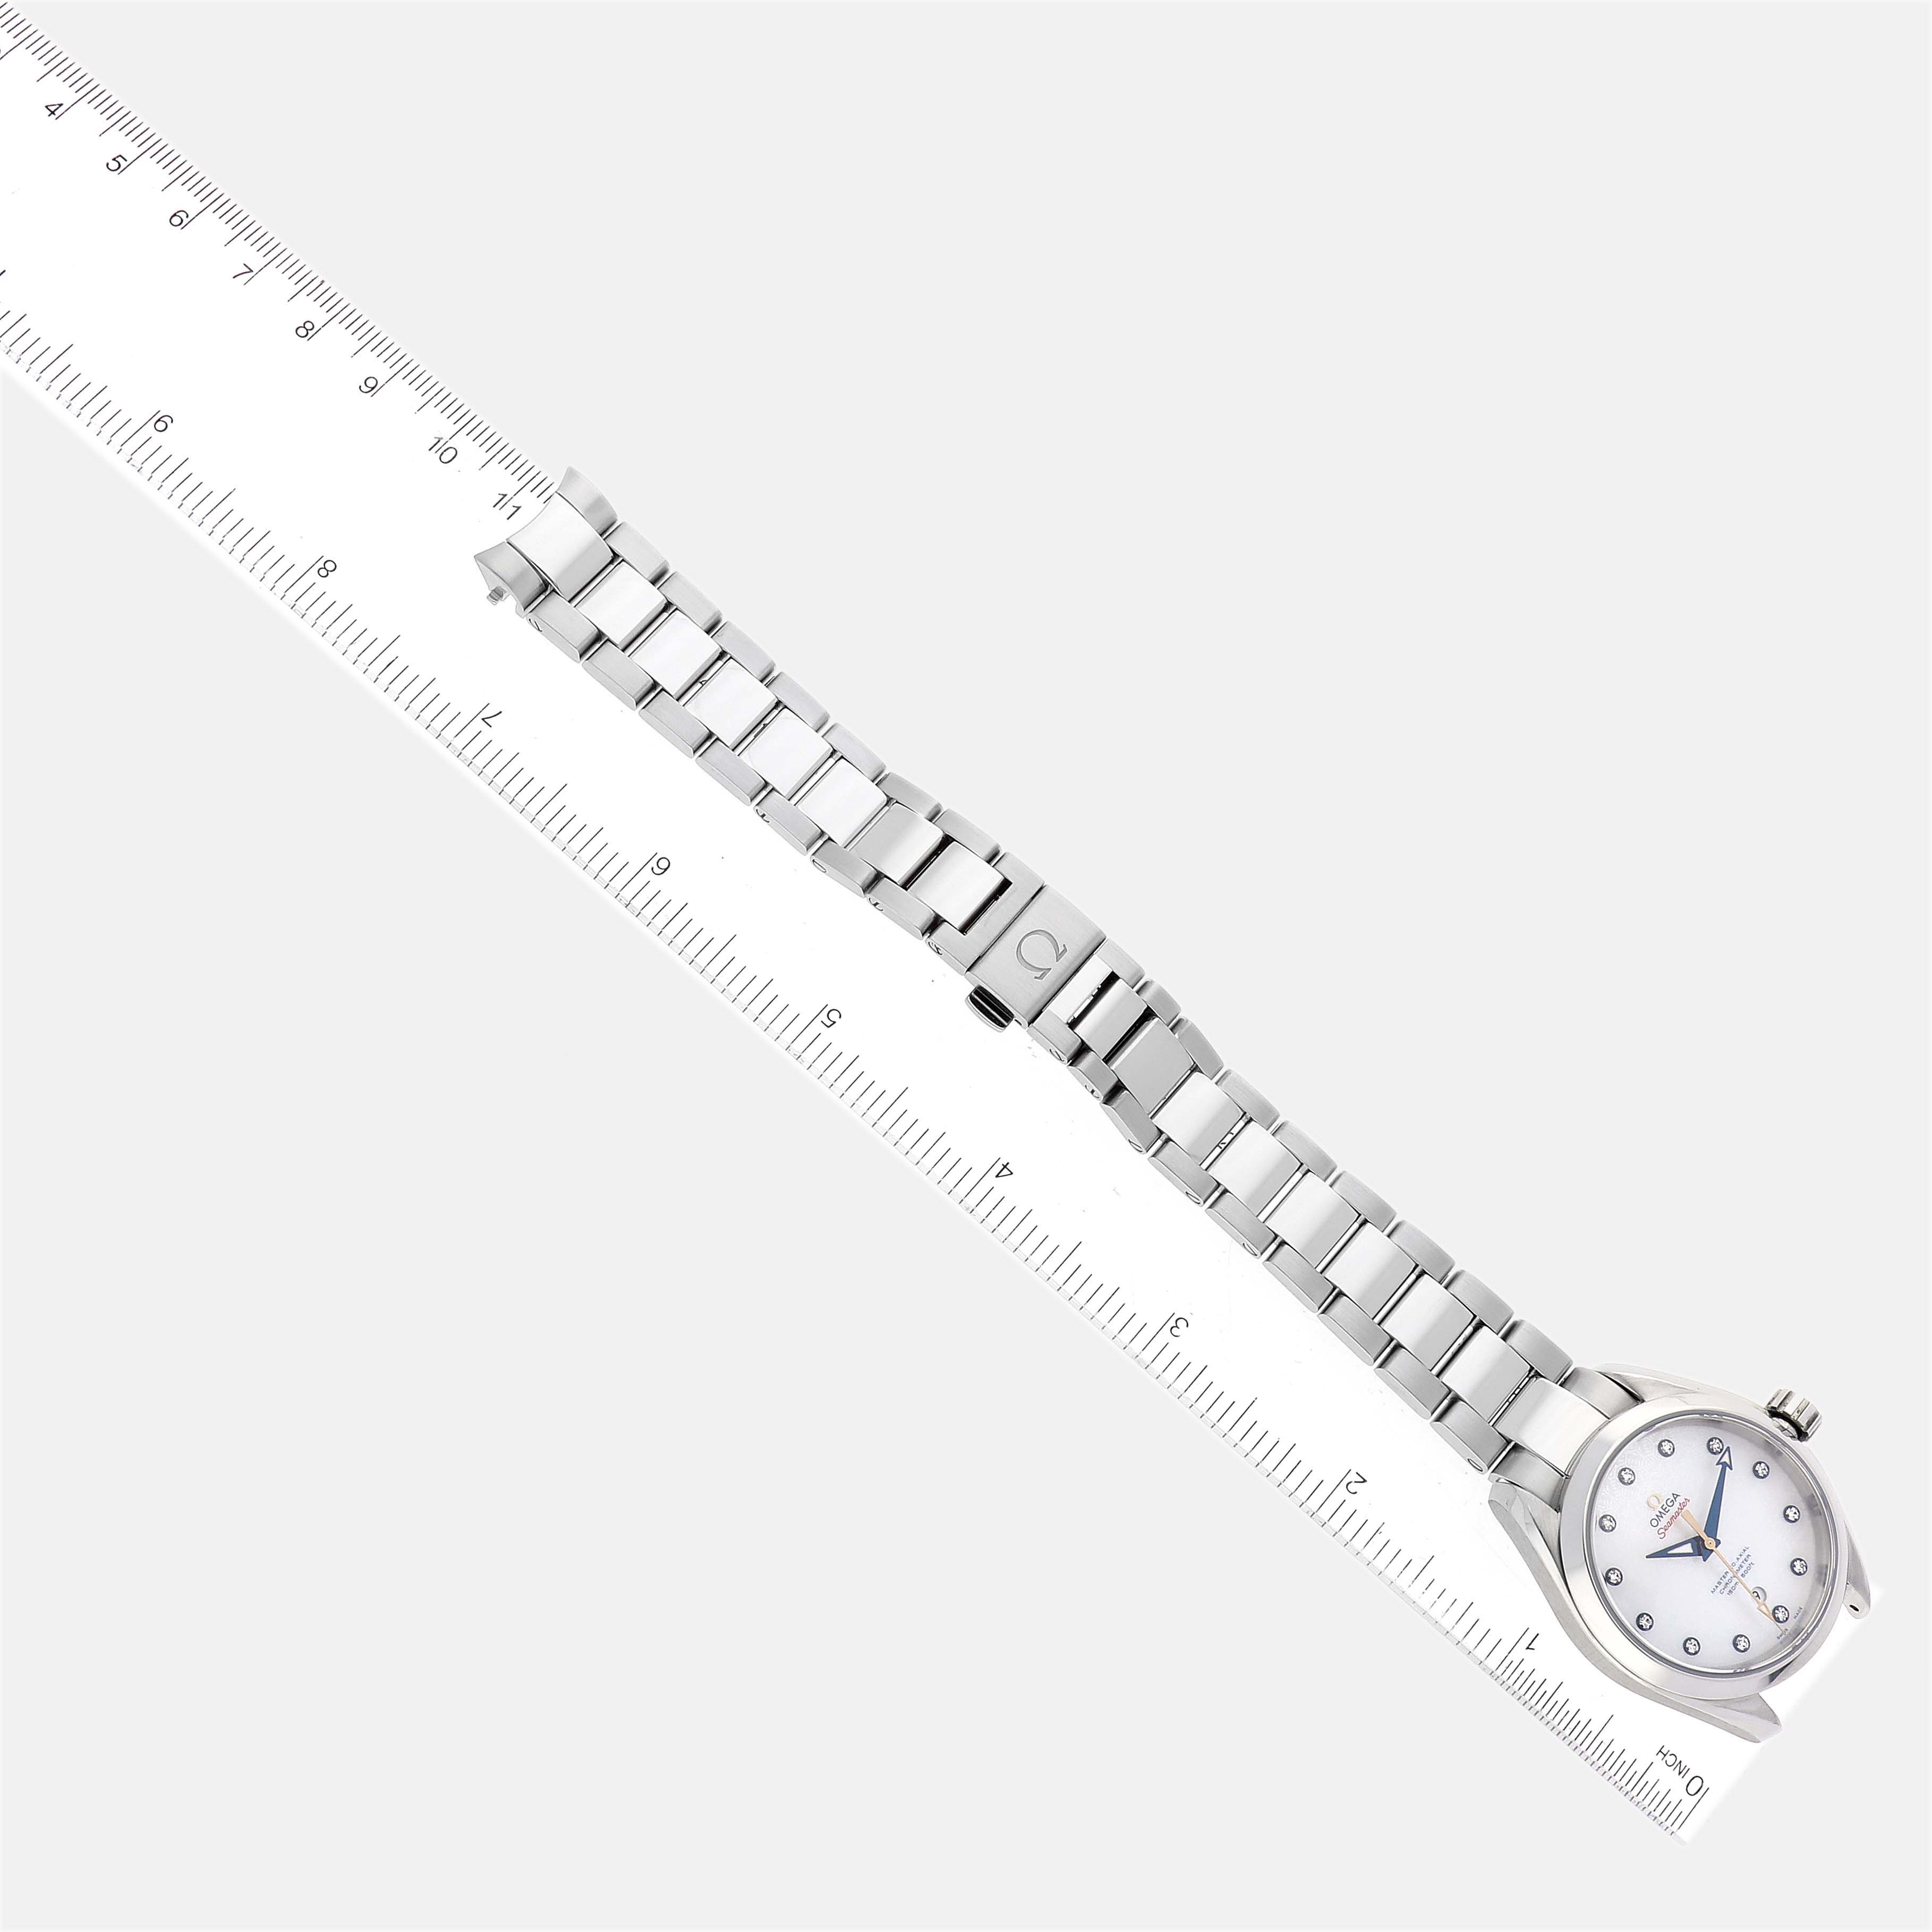 Omega Silver MOP Diamond Stainless Steel Aqua Terra 231.10.34.20.55.003 Automatic Women's Wristwatch 34 Mm